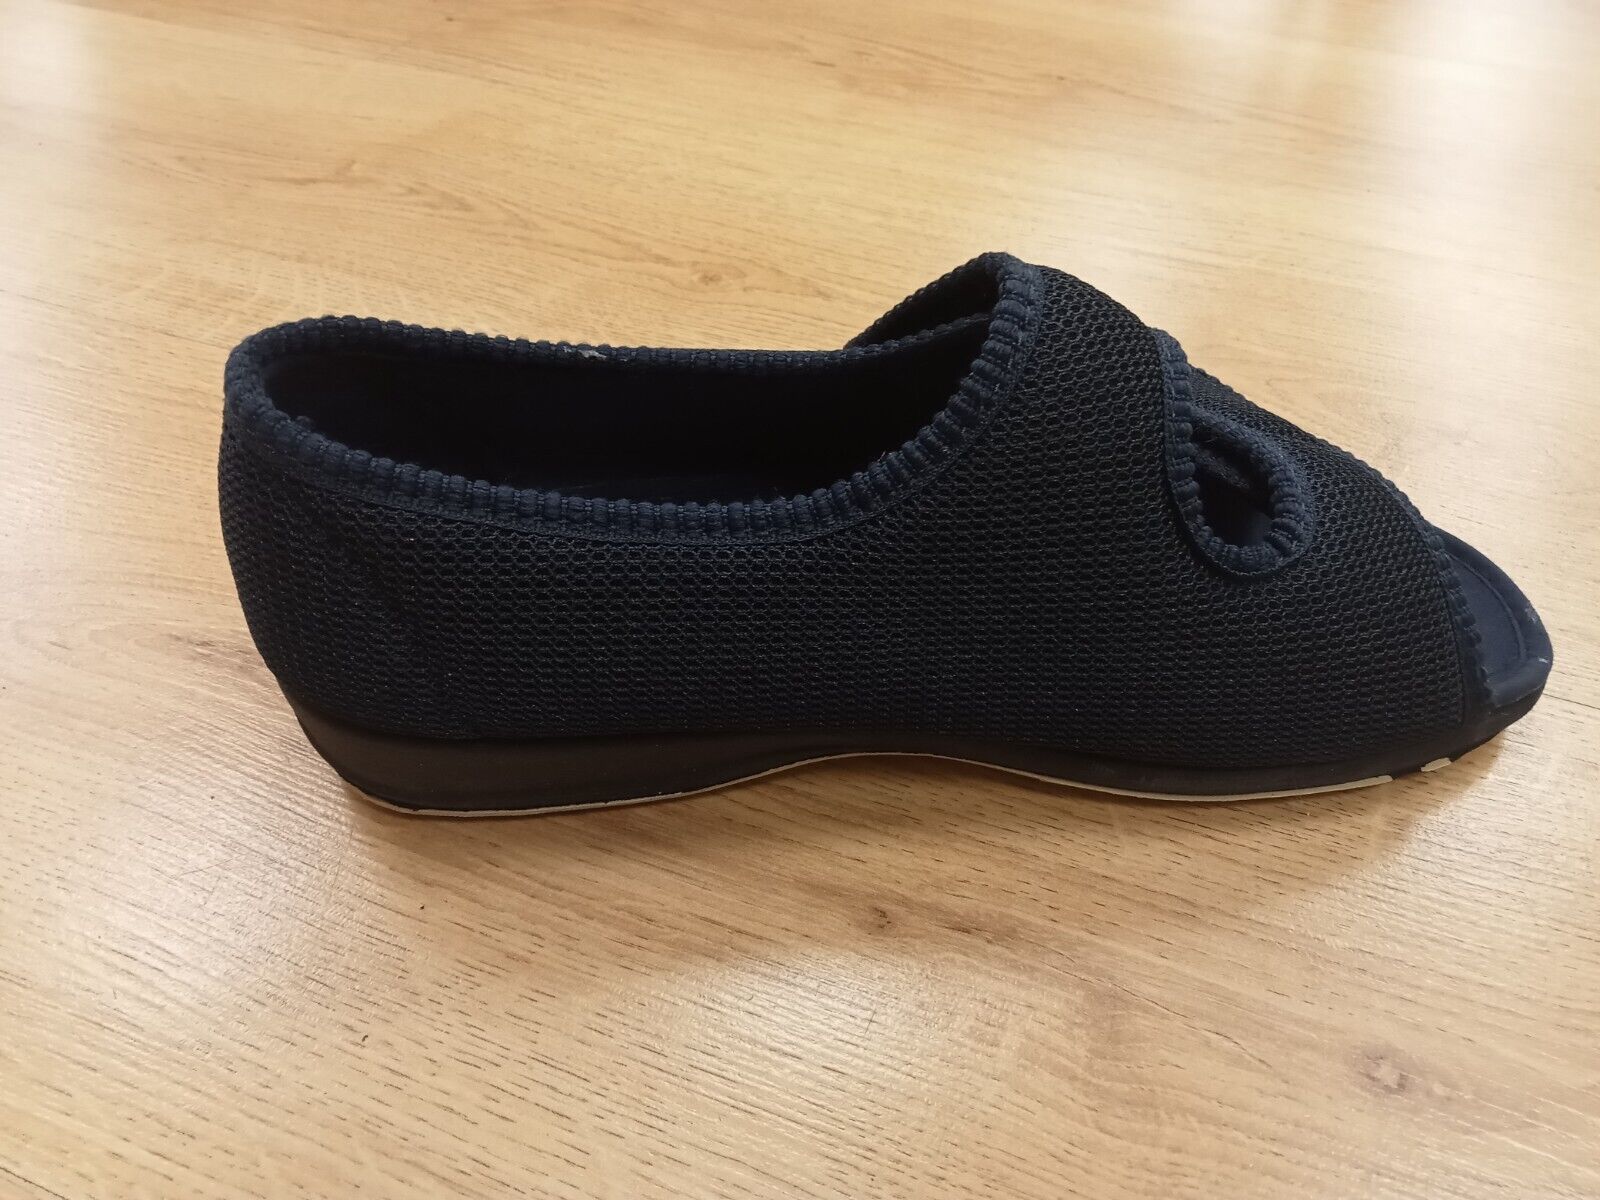 Celia Ruiz Extra Wide EEE DoubleVelcro Strap Sandals/Slippers sizes 3-9 ...